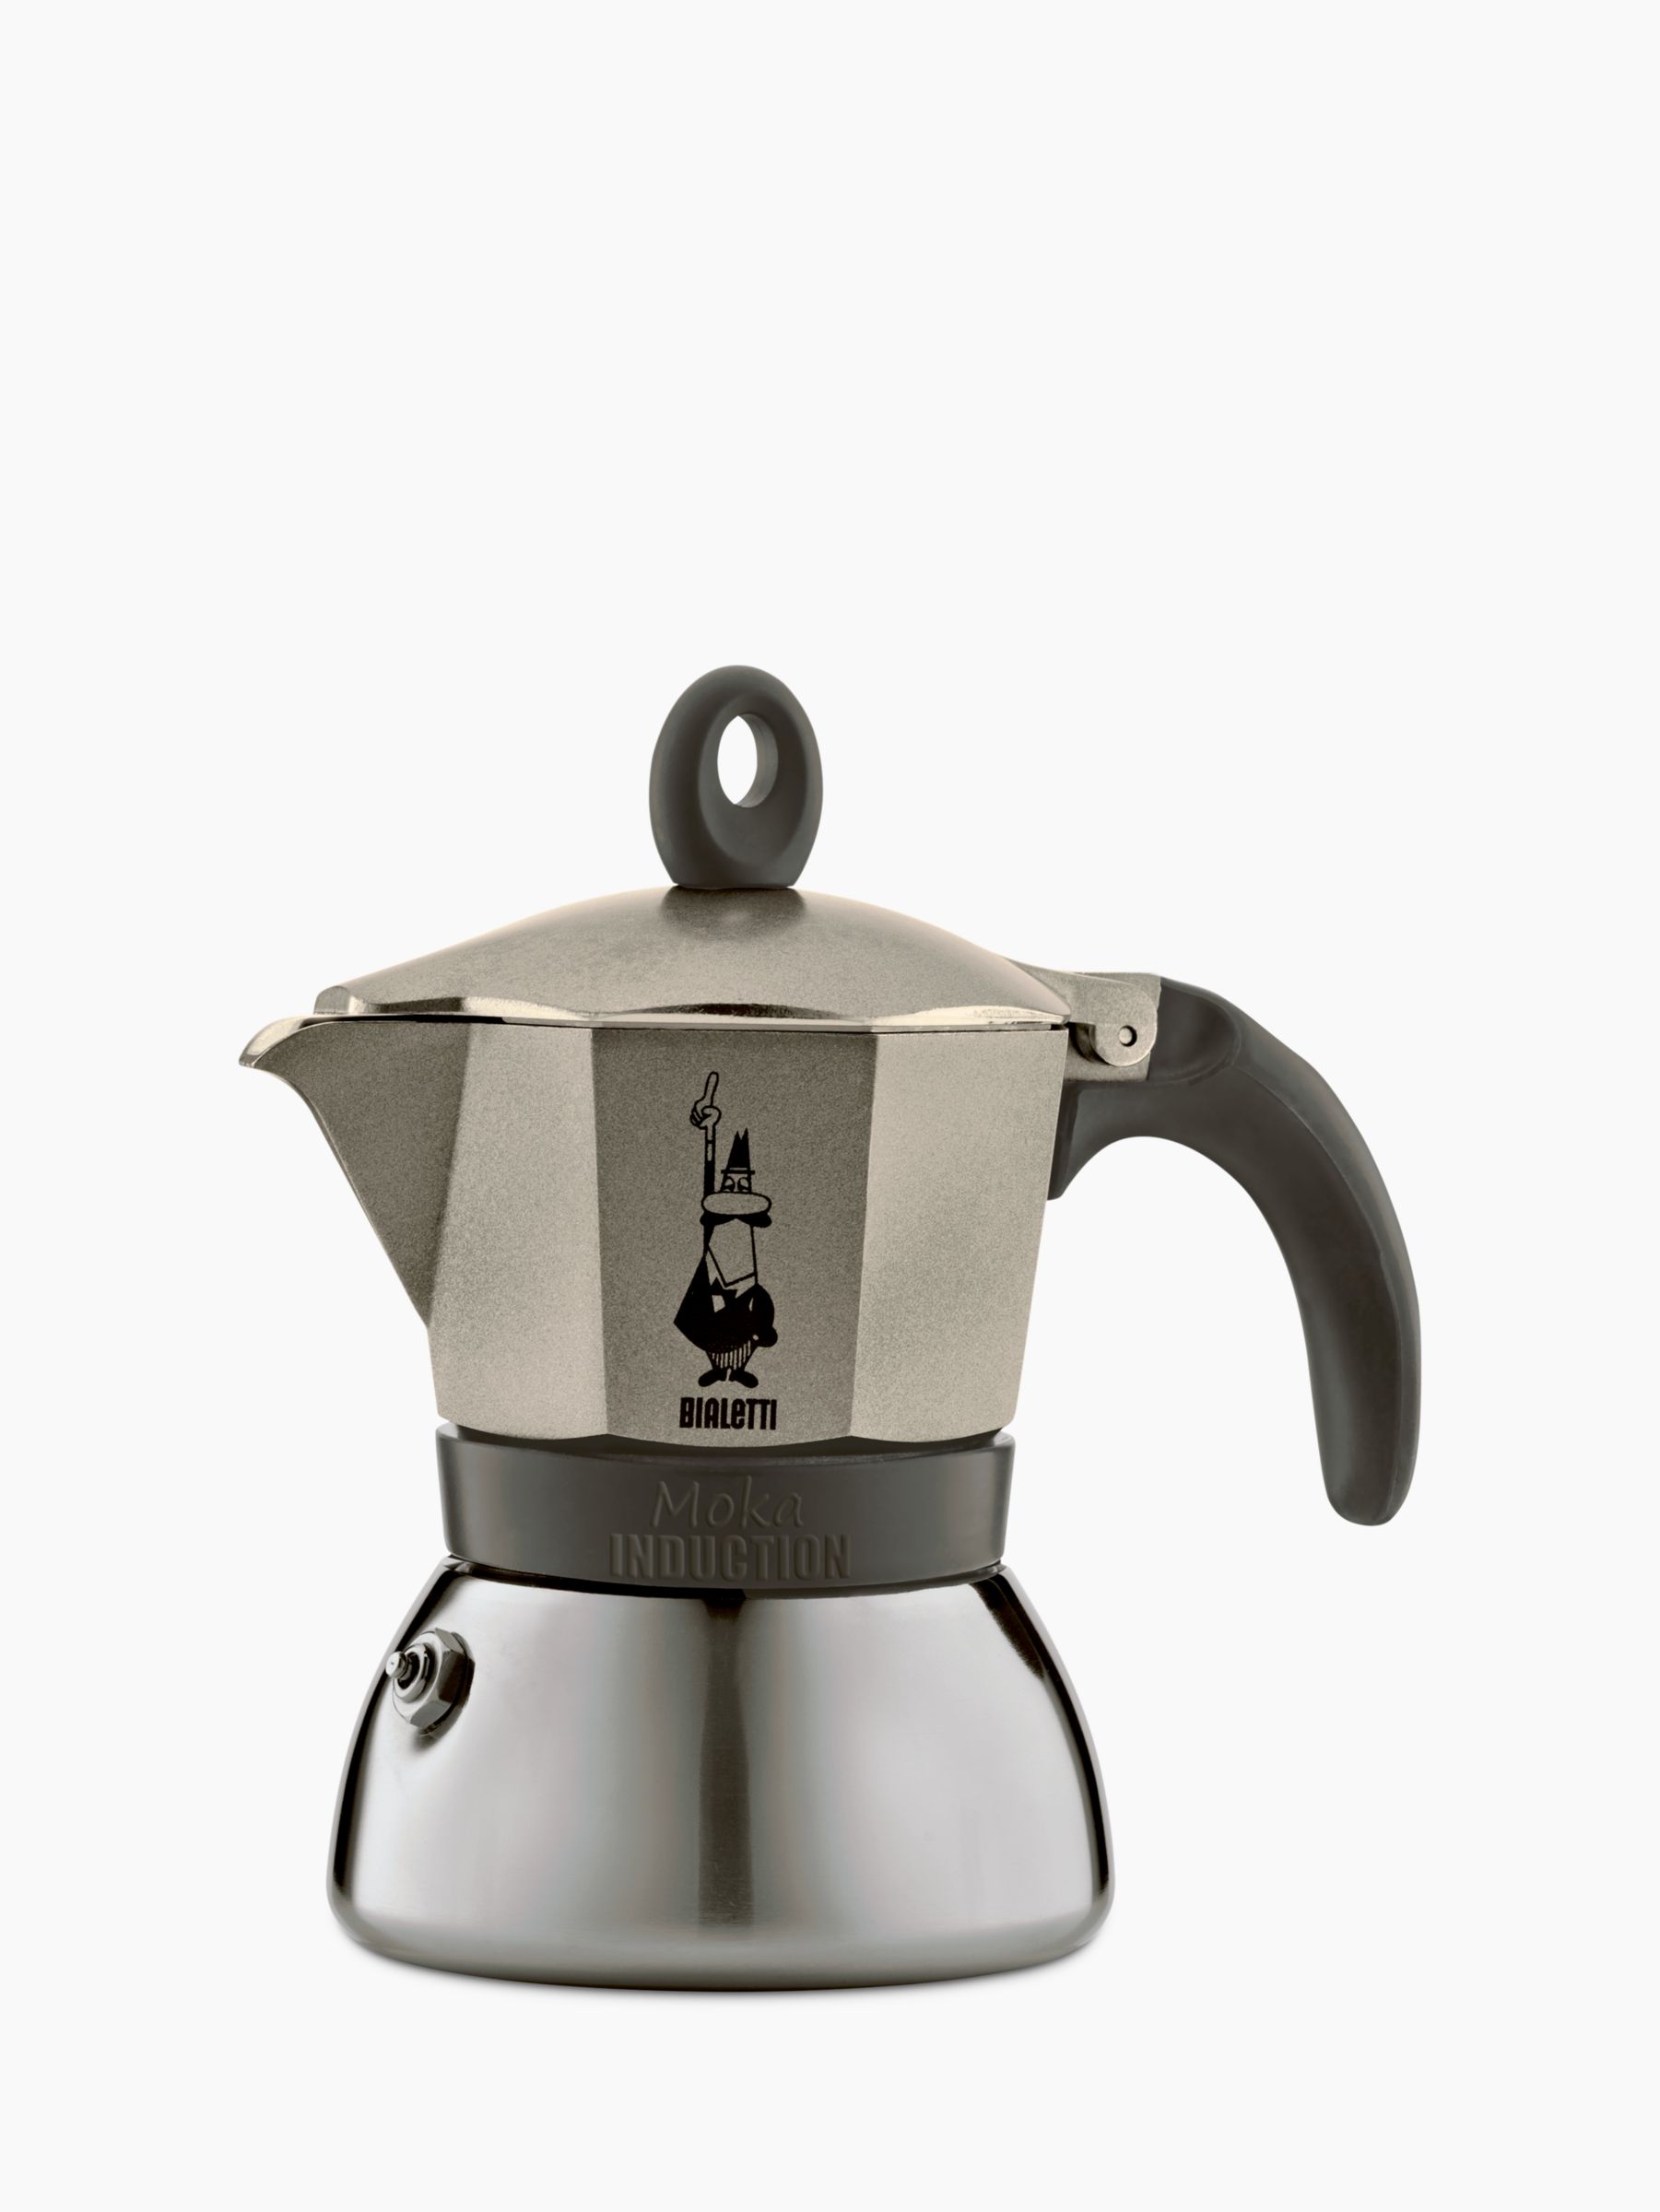 Bialetti Moka Induction Coffee Maker, 3 Cup